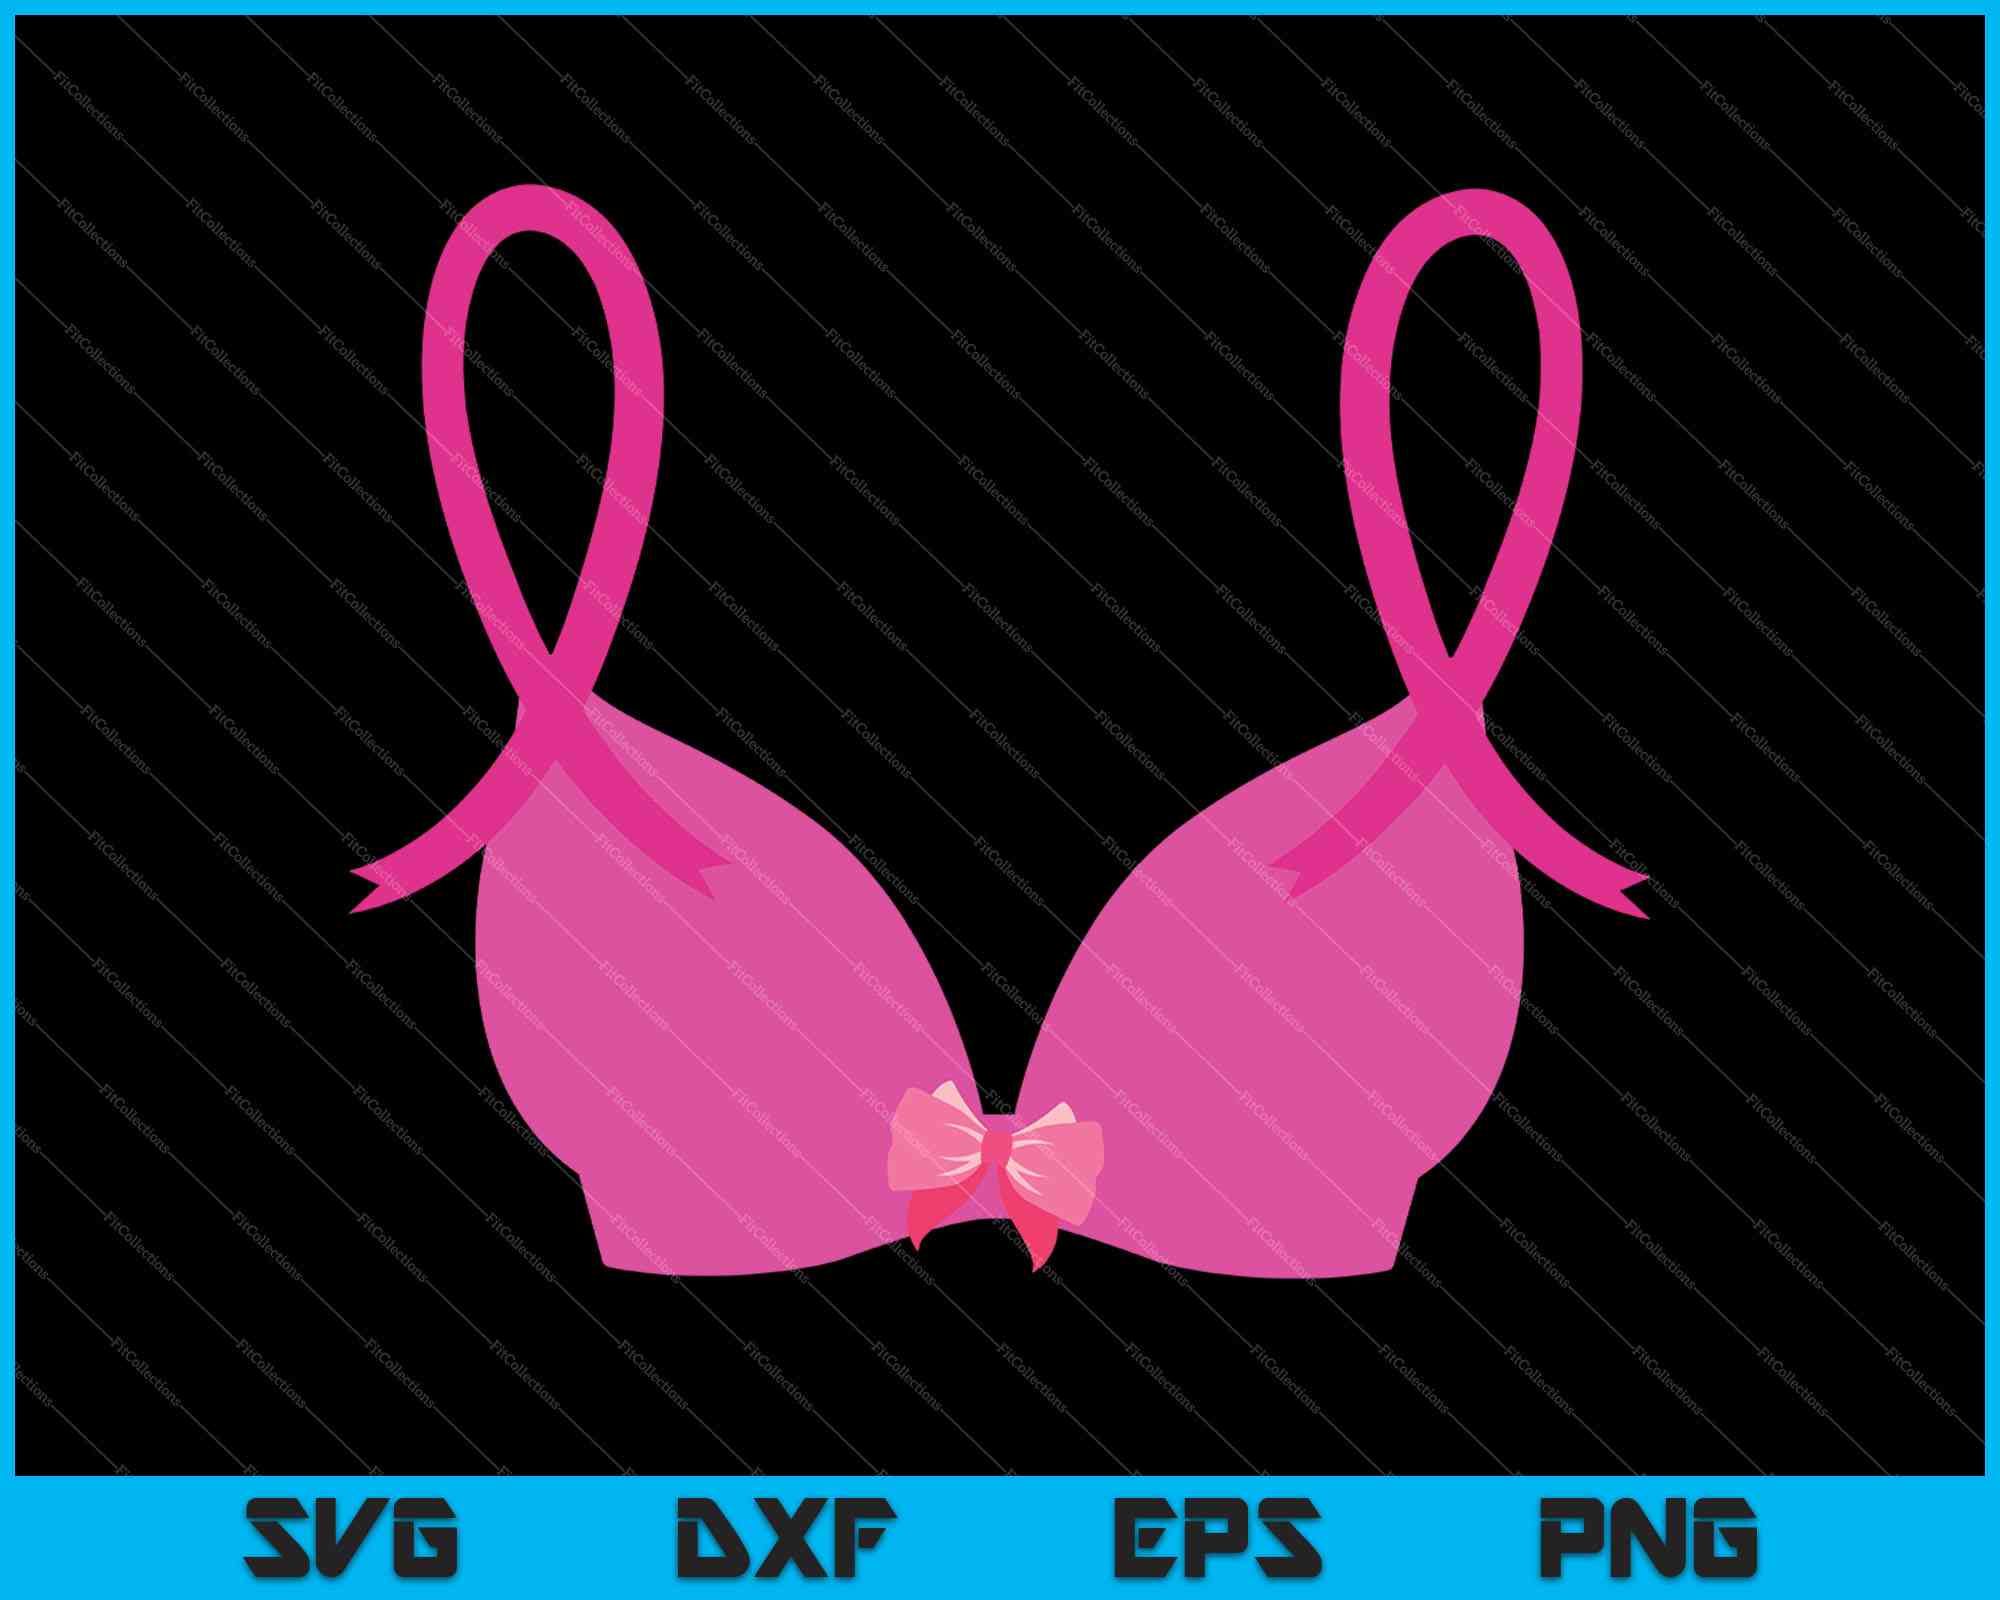 How a bra should fit - Pink Ribbon Lingerie